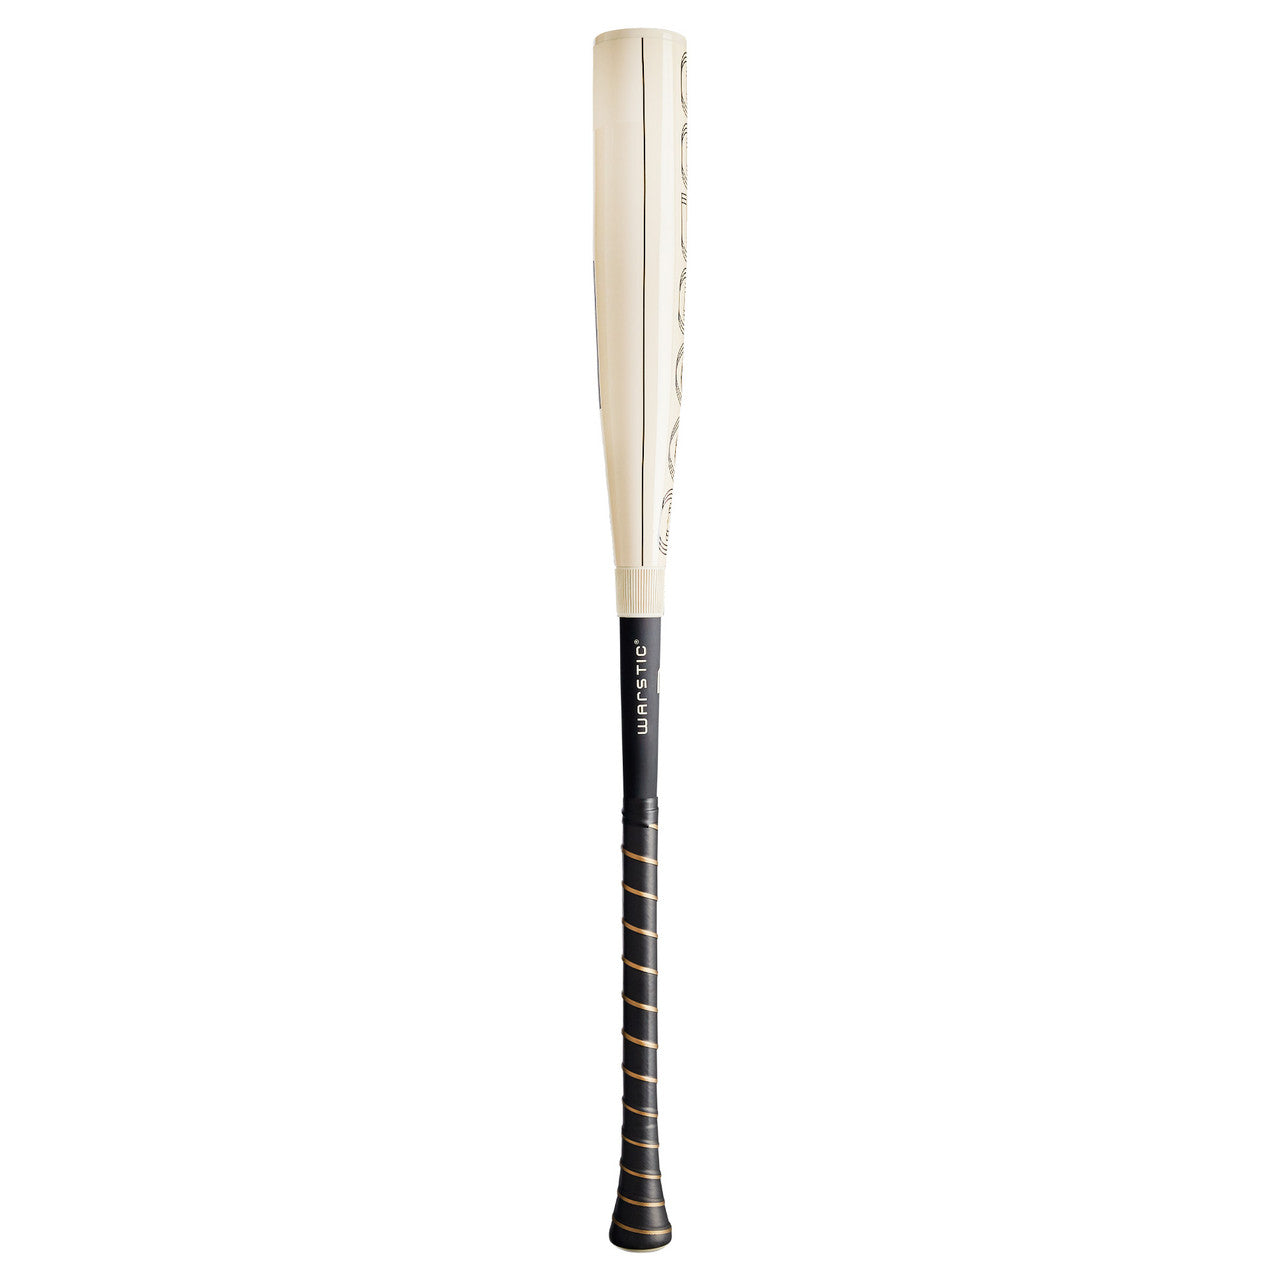 Warstic Bonesaber Hybrid (-3) BBCOR Baseball Bat Bat Club USA